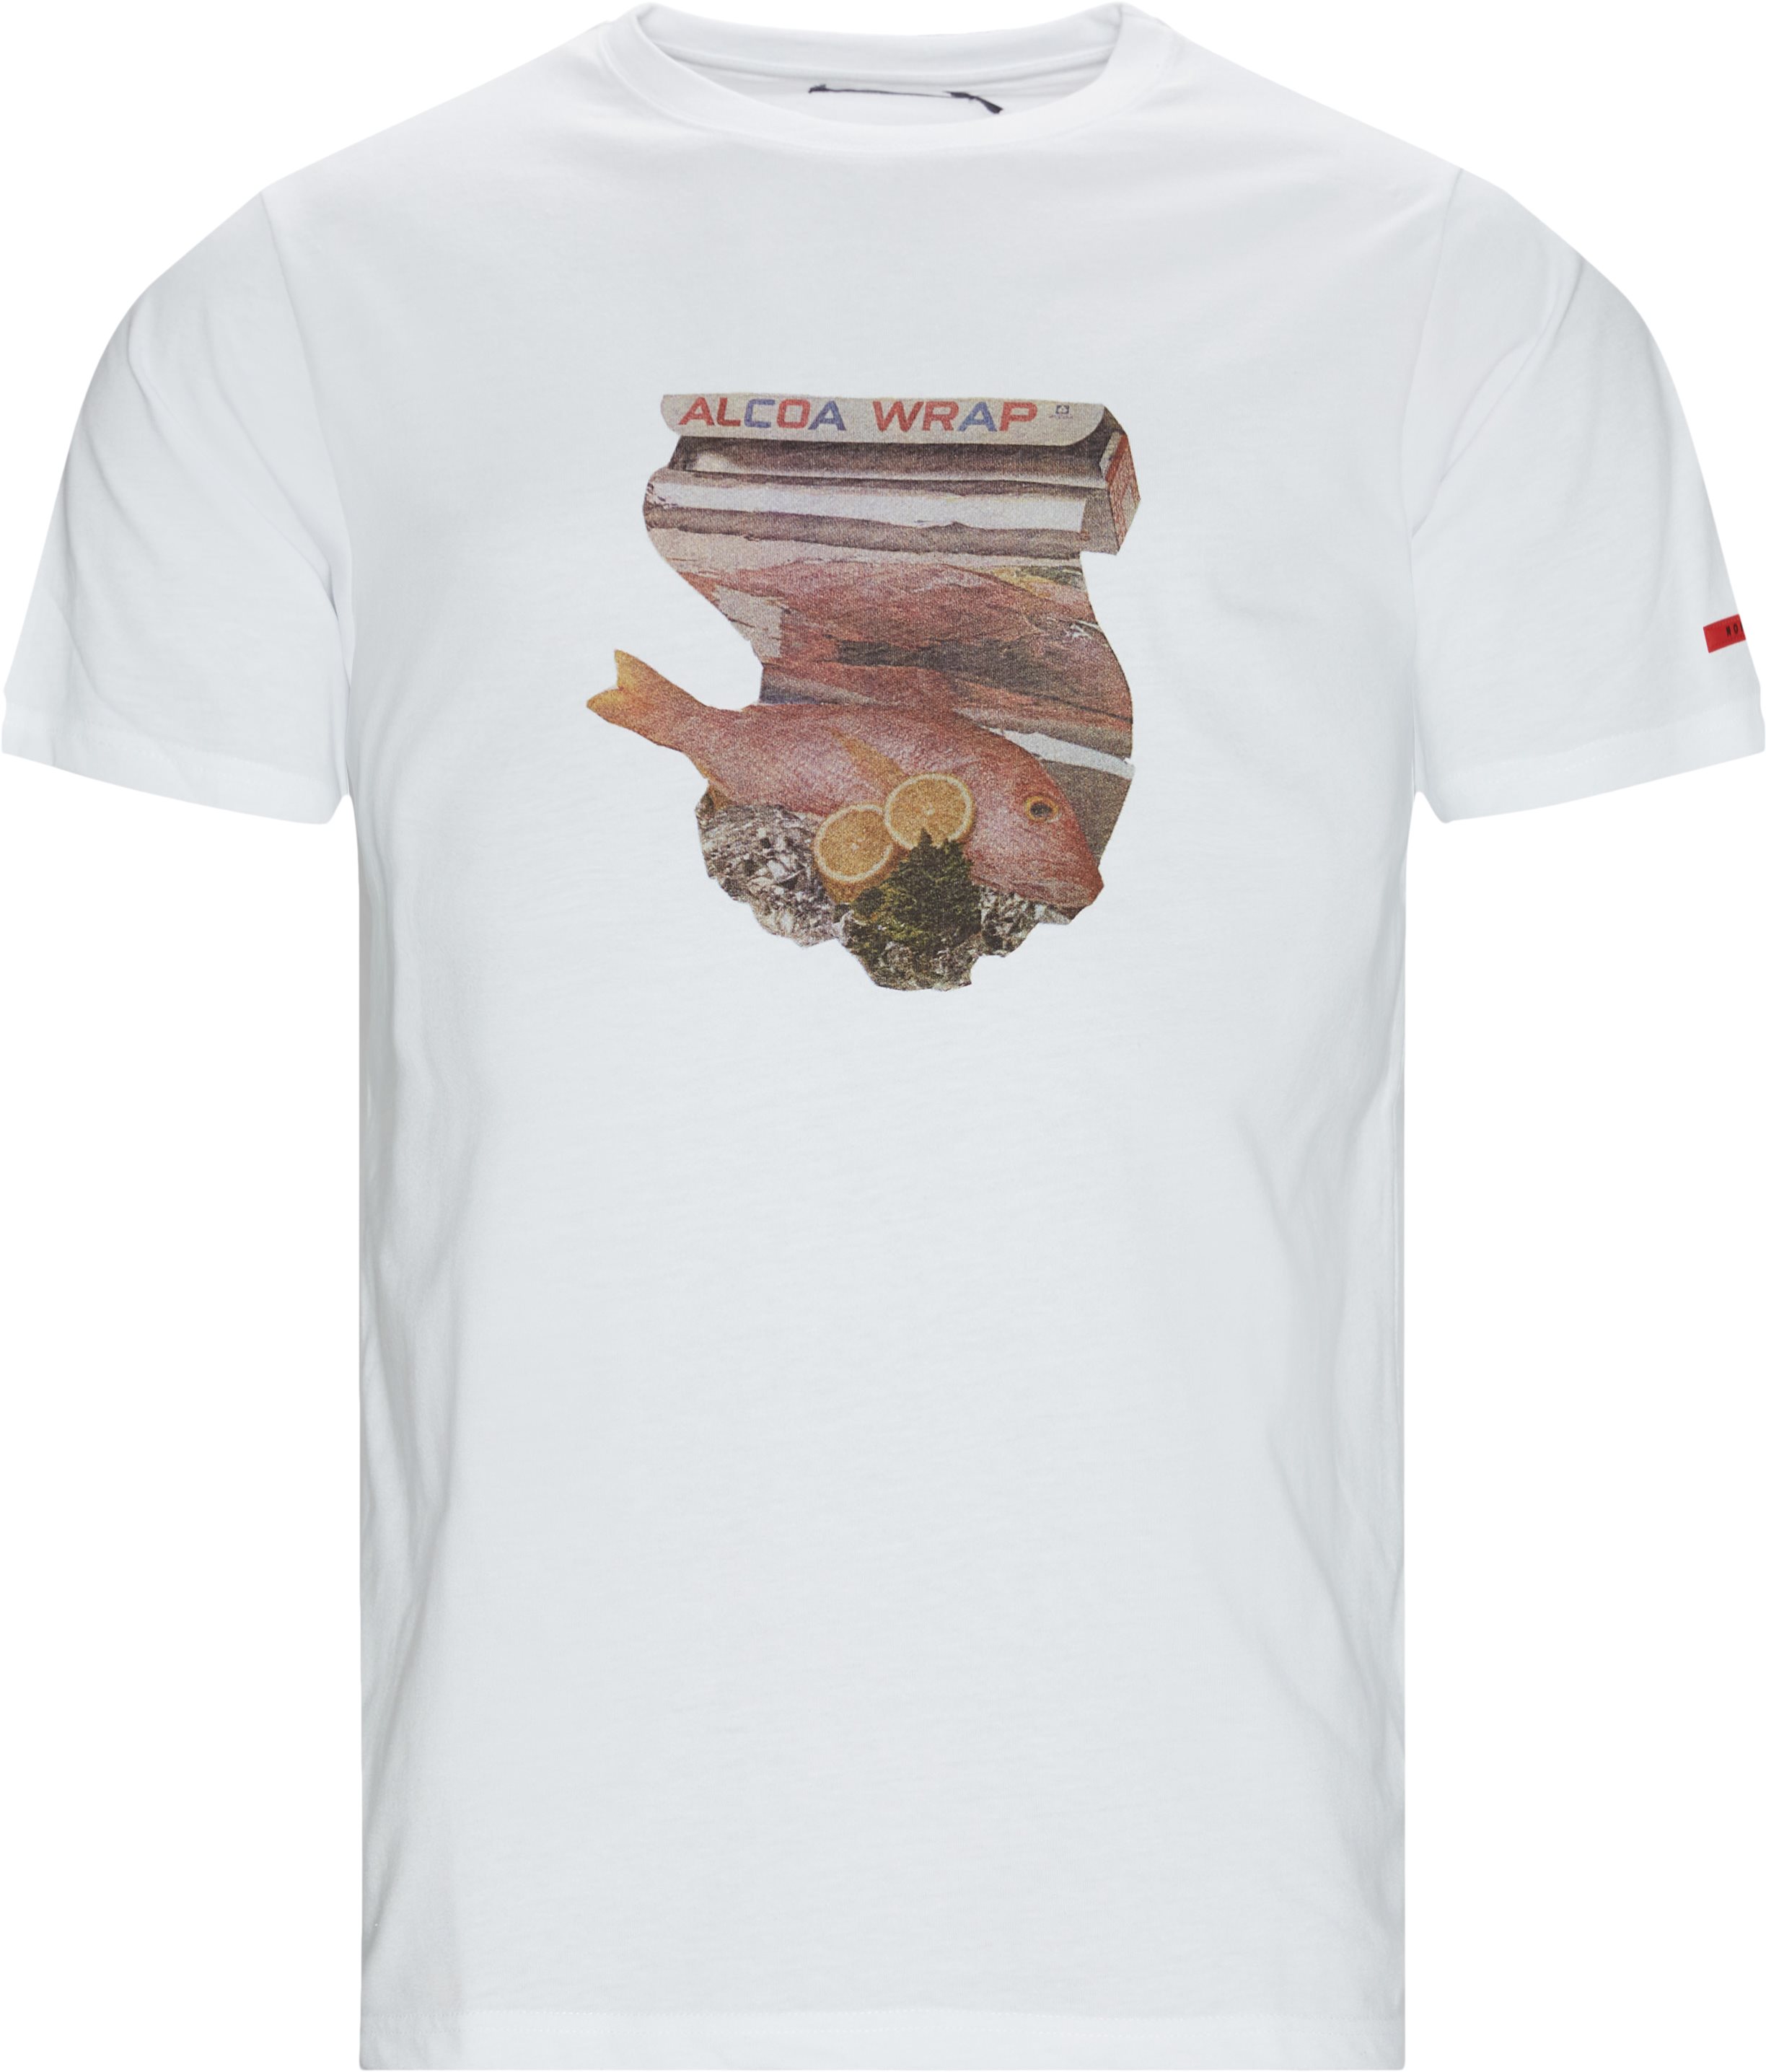 Munster Tee  - T-shirts - Regular fit - Vit